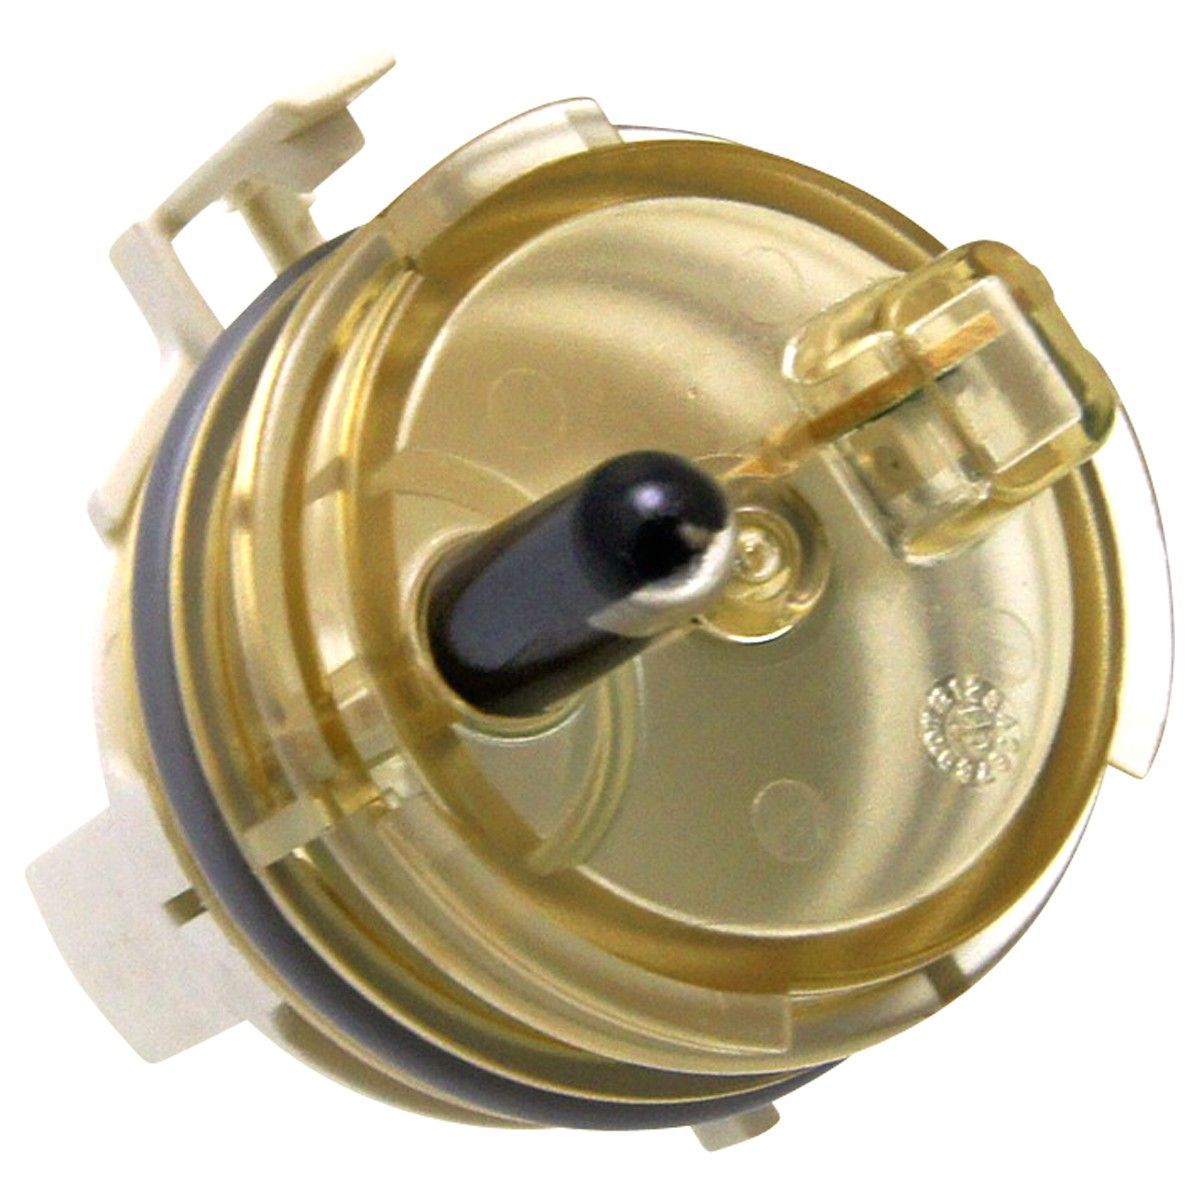 Hladinový snímač, senzor zakalení myčka Whirlpool Indesit - 481227128459 Whirlpool / Indesit